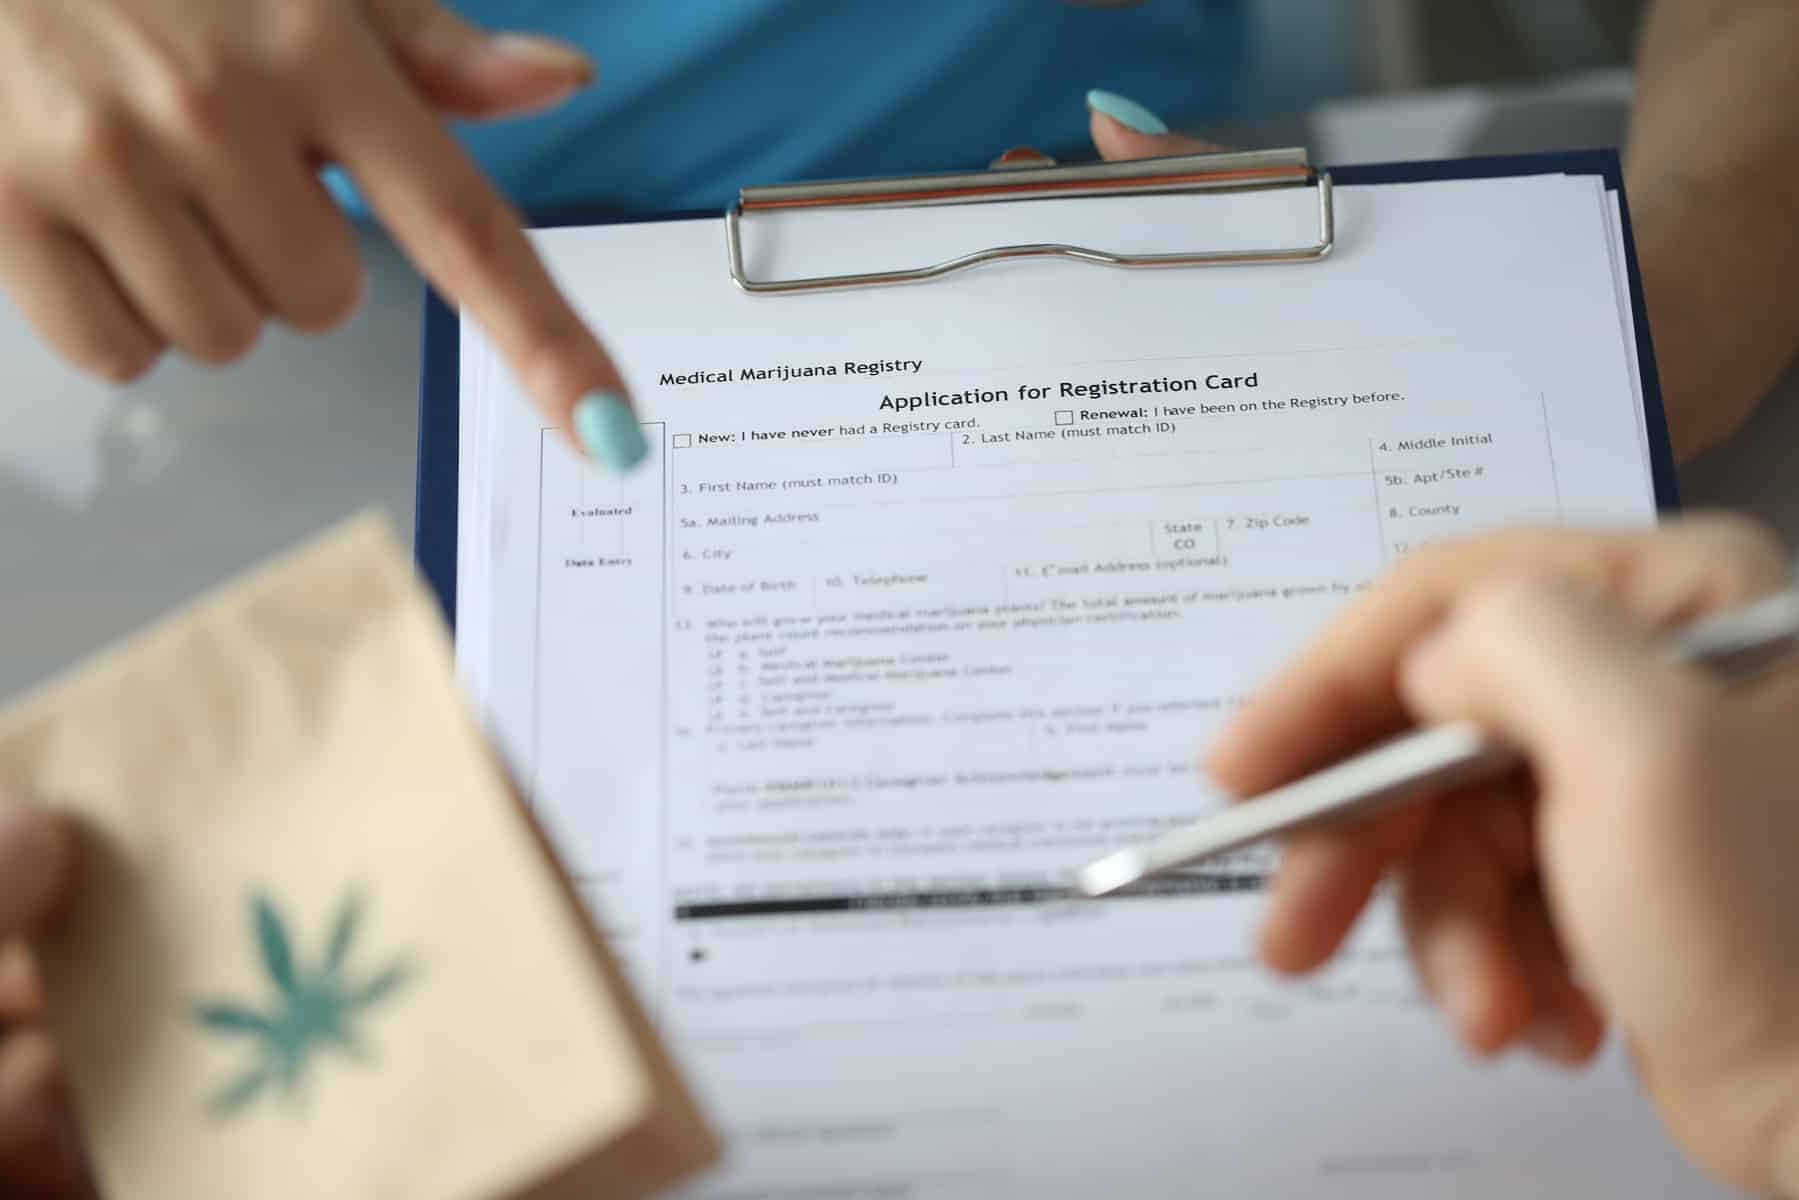 Patient filling application for registration card, medical marijuana evaluation